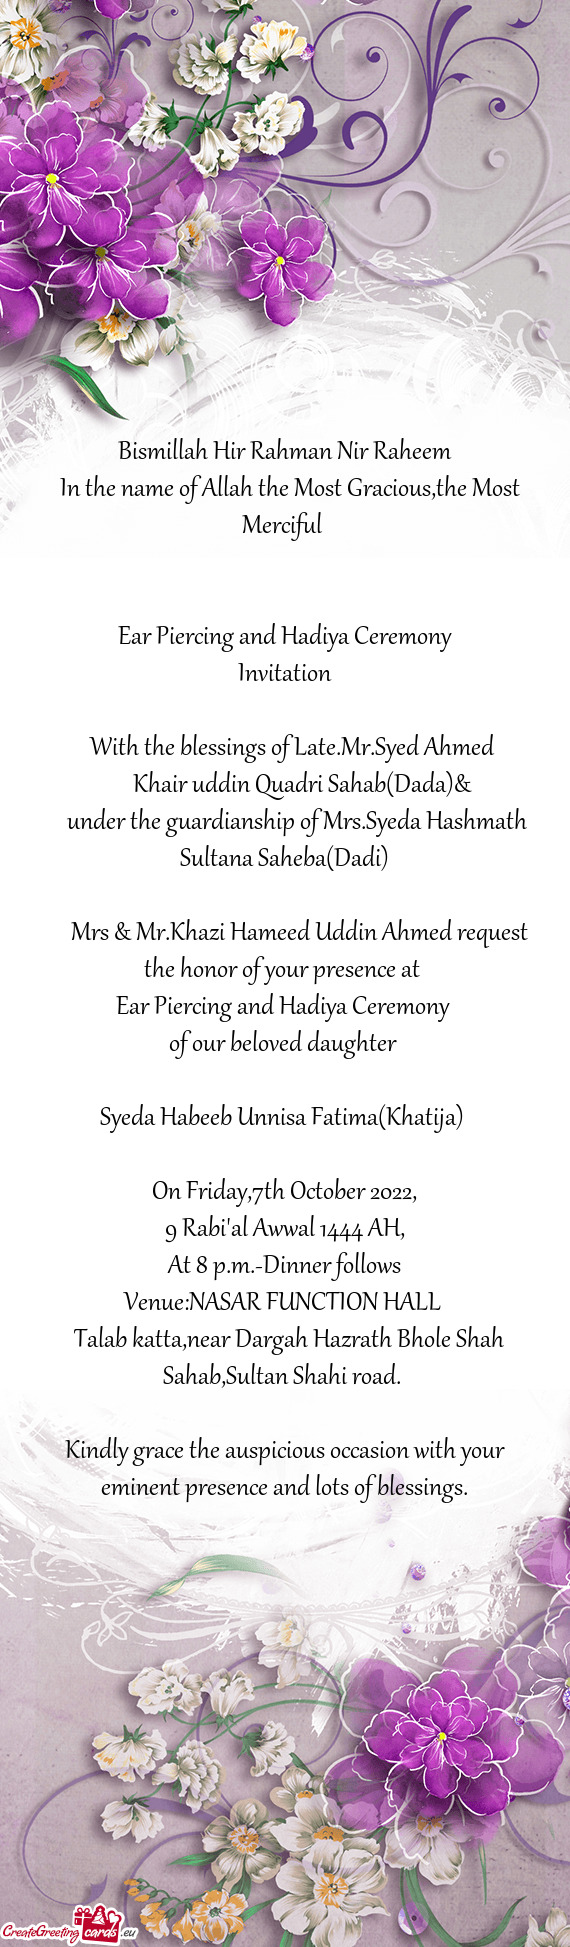 Under the guardianship of Mrs.Syeda Hashmath Sultana Saheba(Dadi)